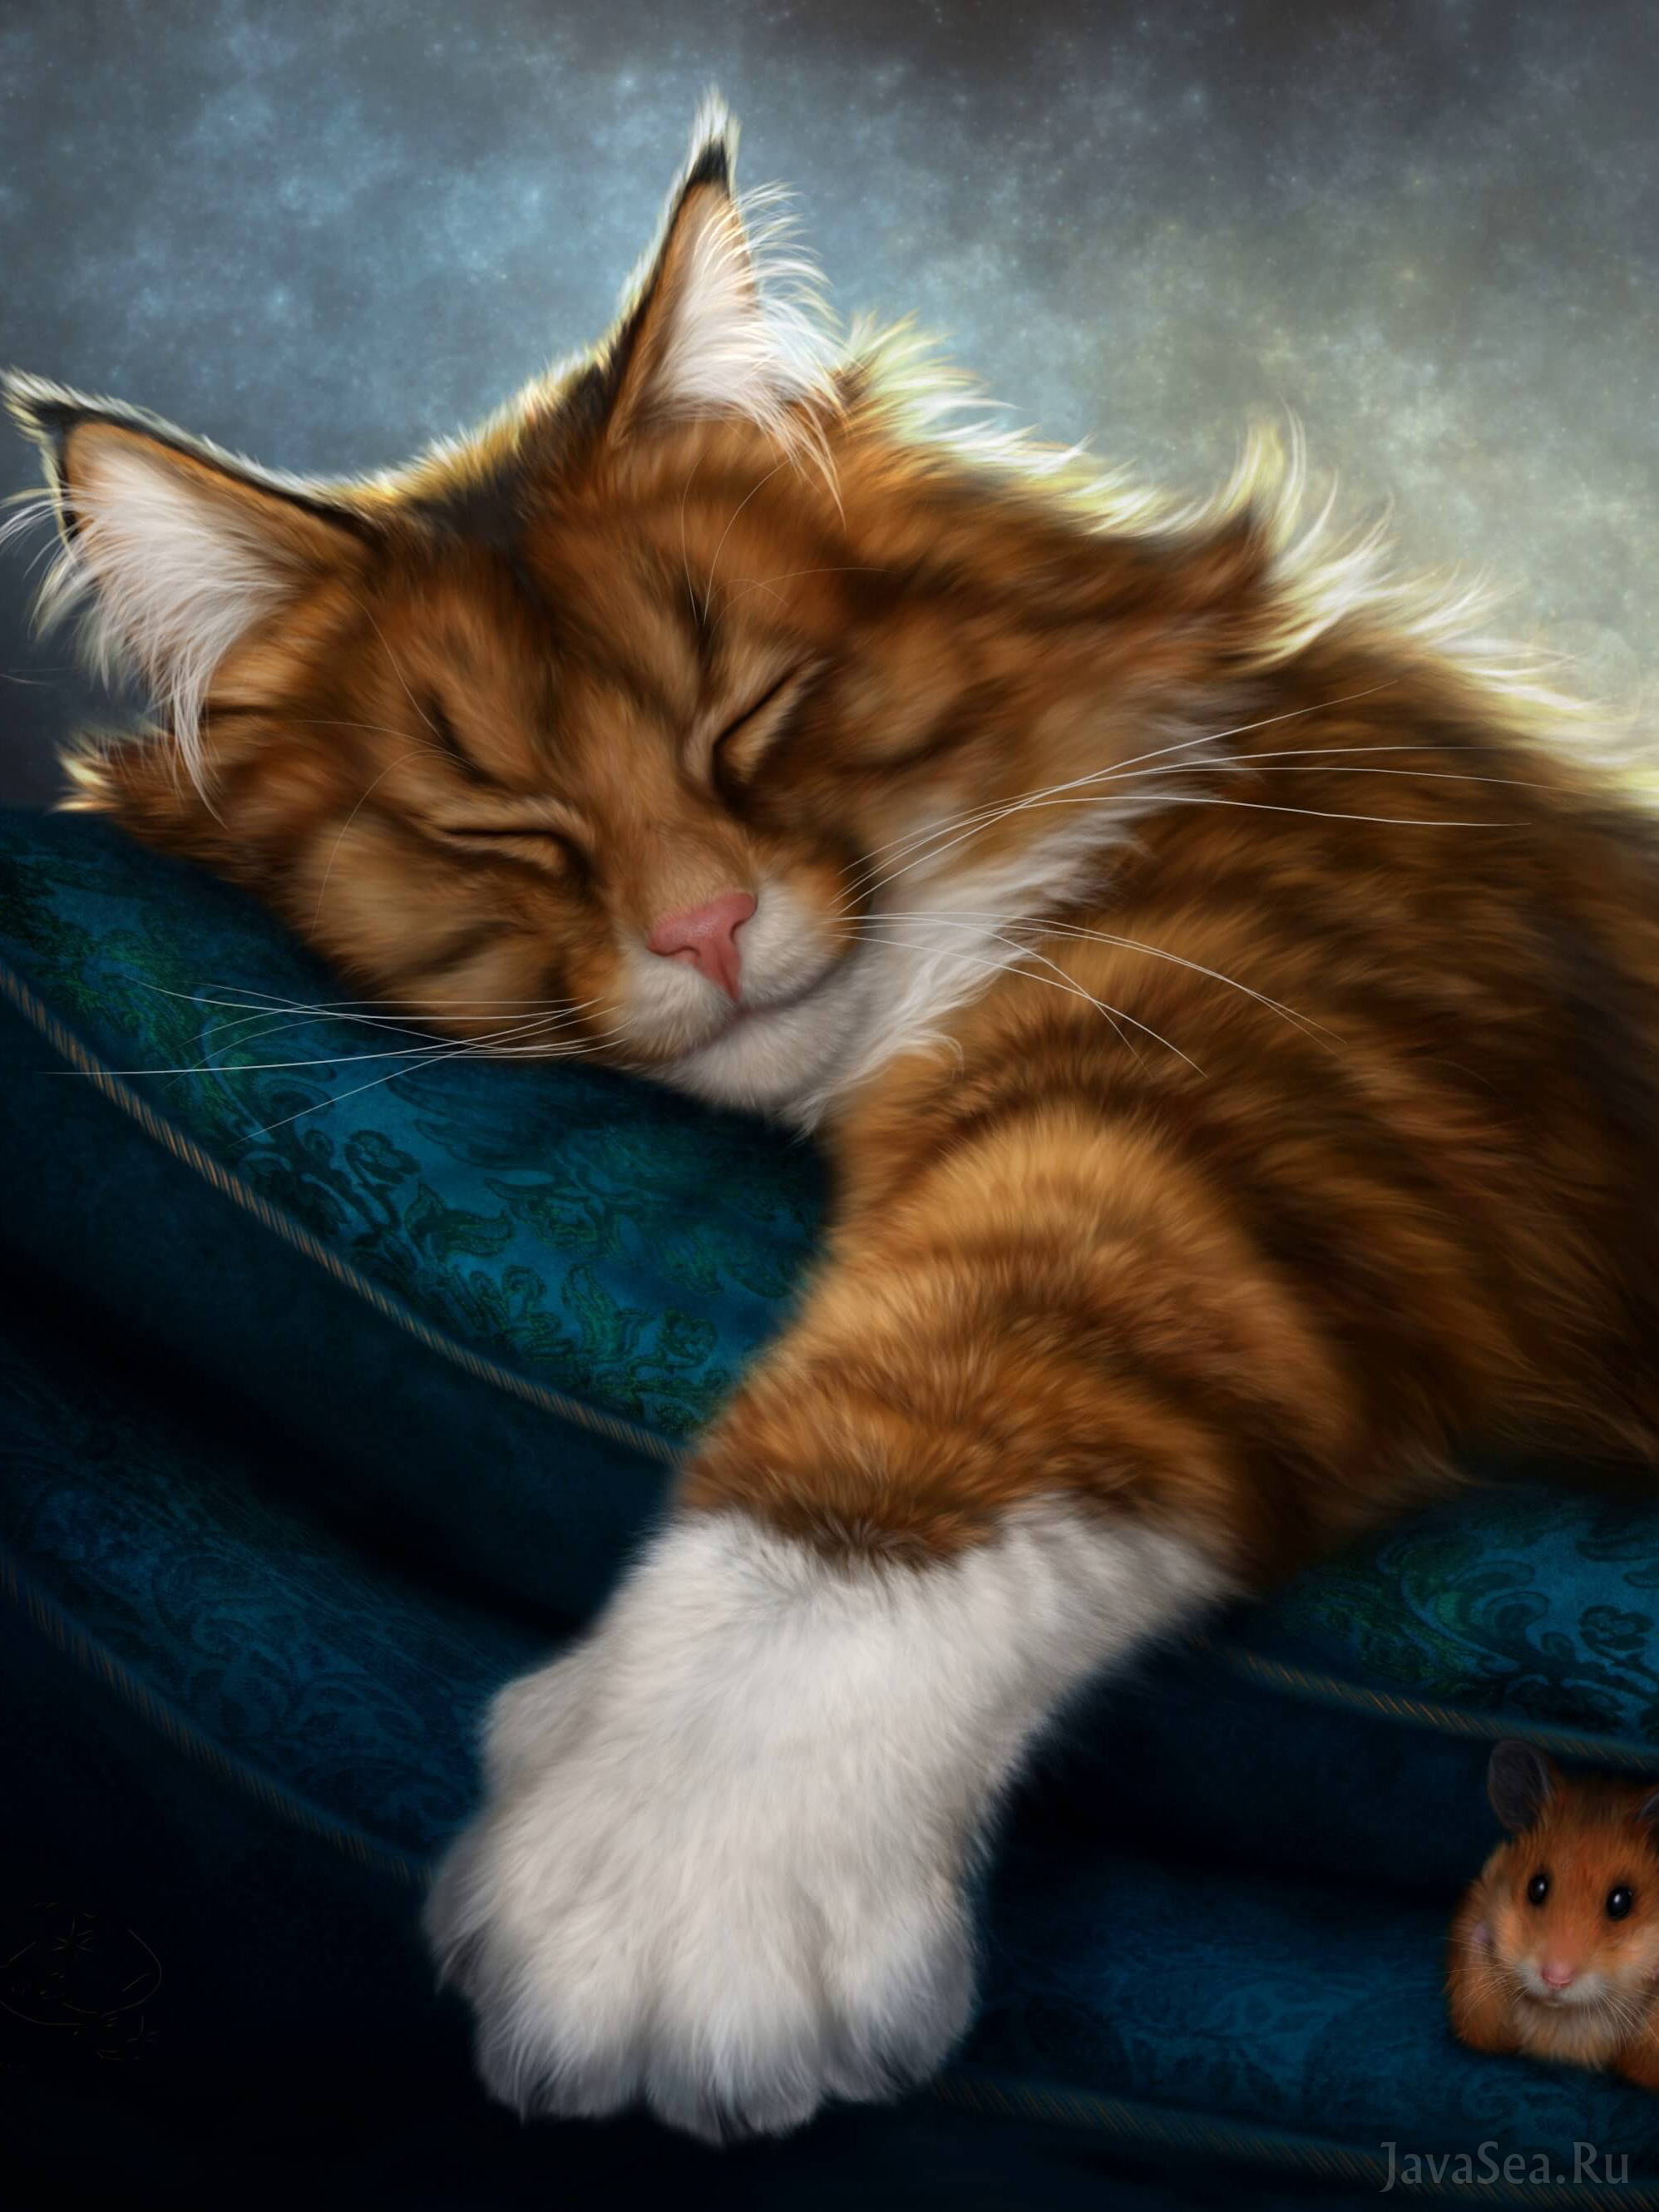 Аватарка сон. Спящий кот. Спящие рыжие коты. Спящие котики. Фэнтези кошки.